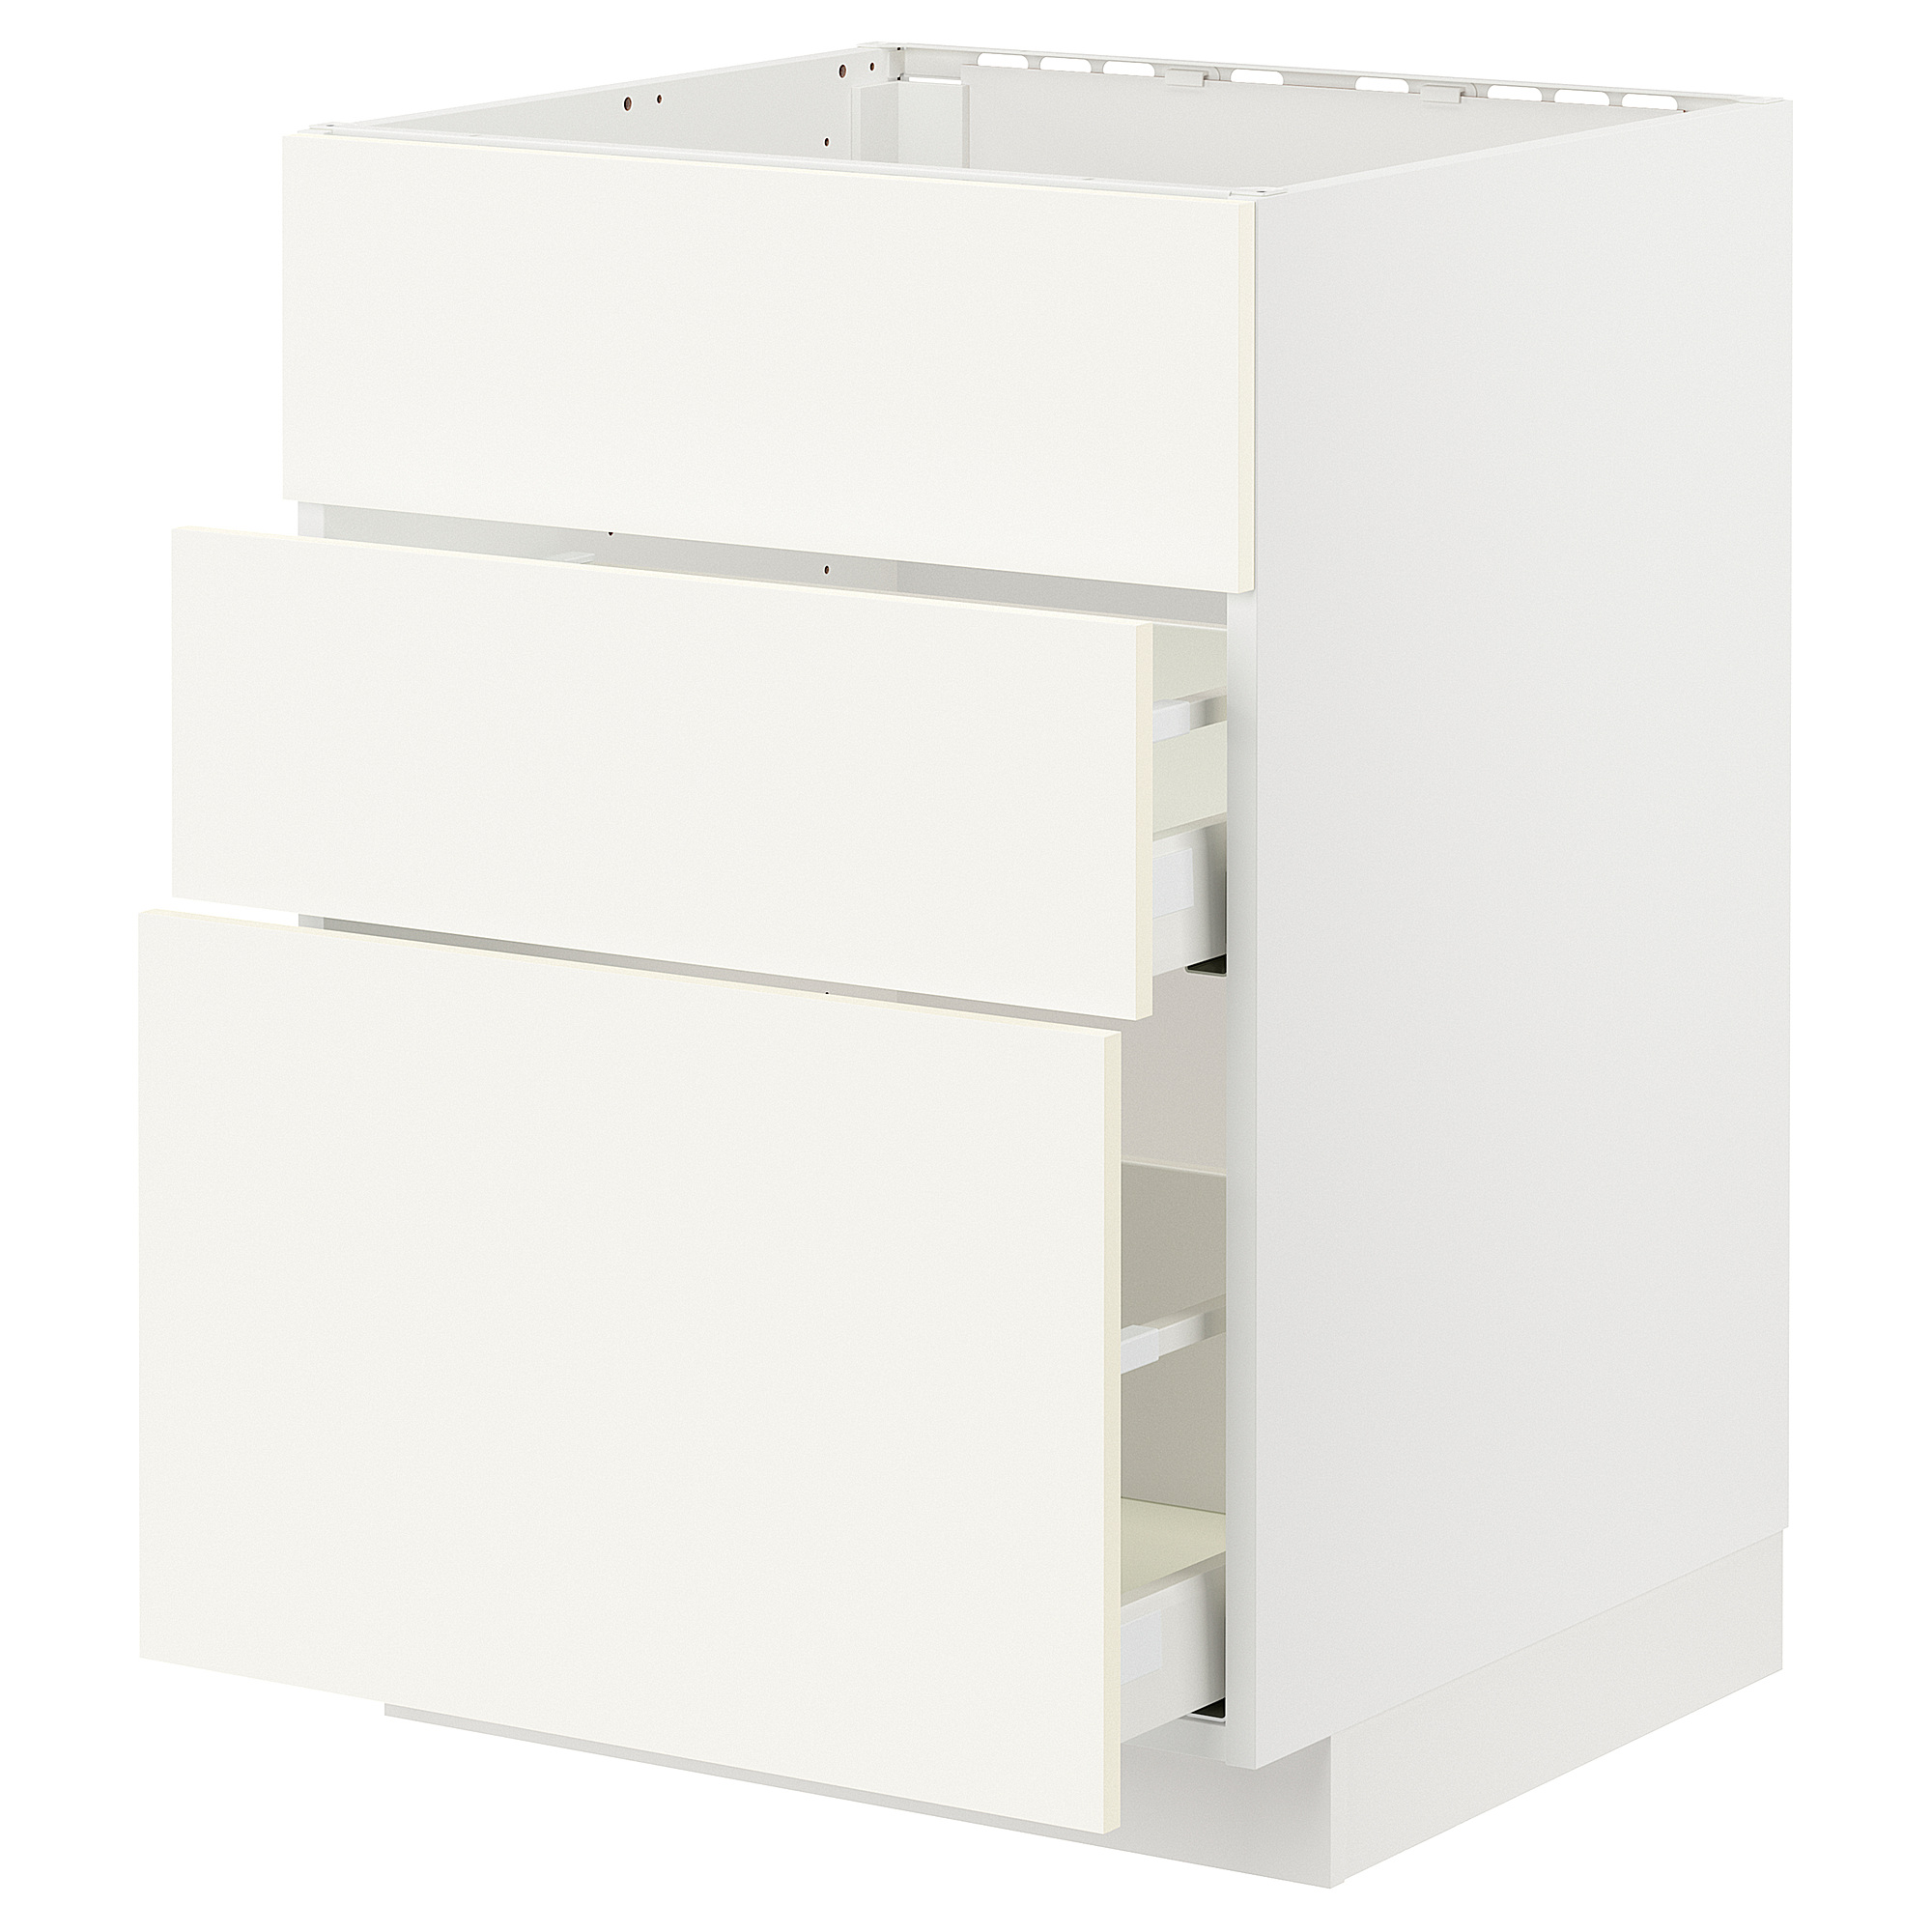 METOD/MAXIMERA base cab f sink+3 fronts/2 drawers